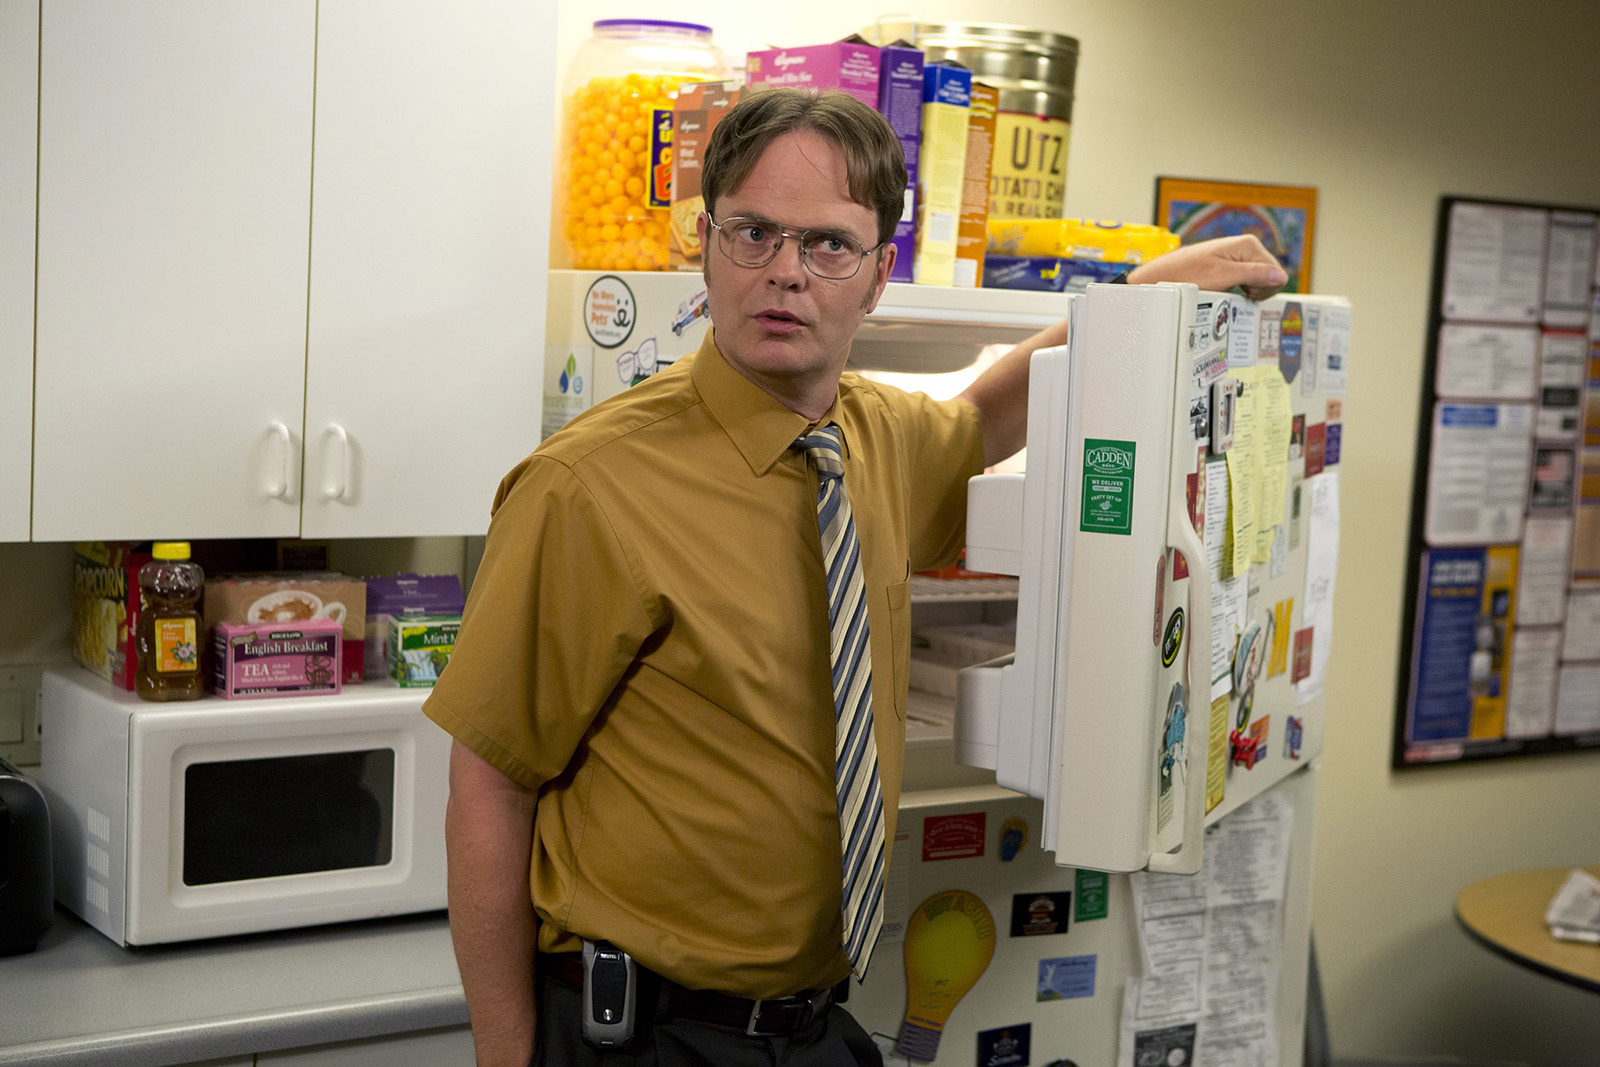 Actor Rainn Wilson as Dwight Schrute on "The Office." Photo courtesy of NBC